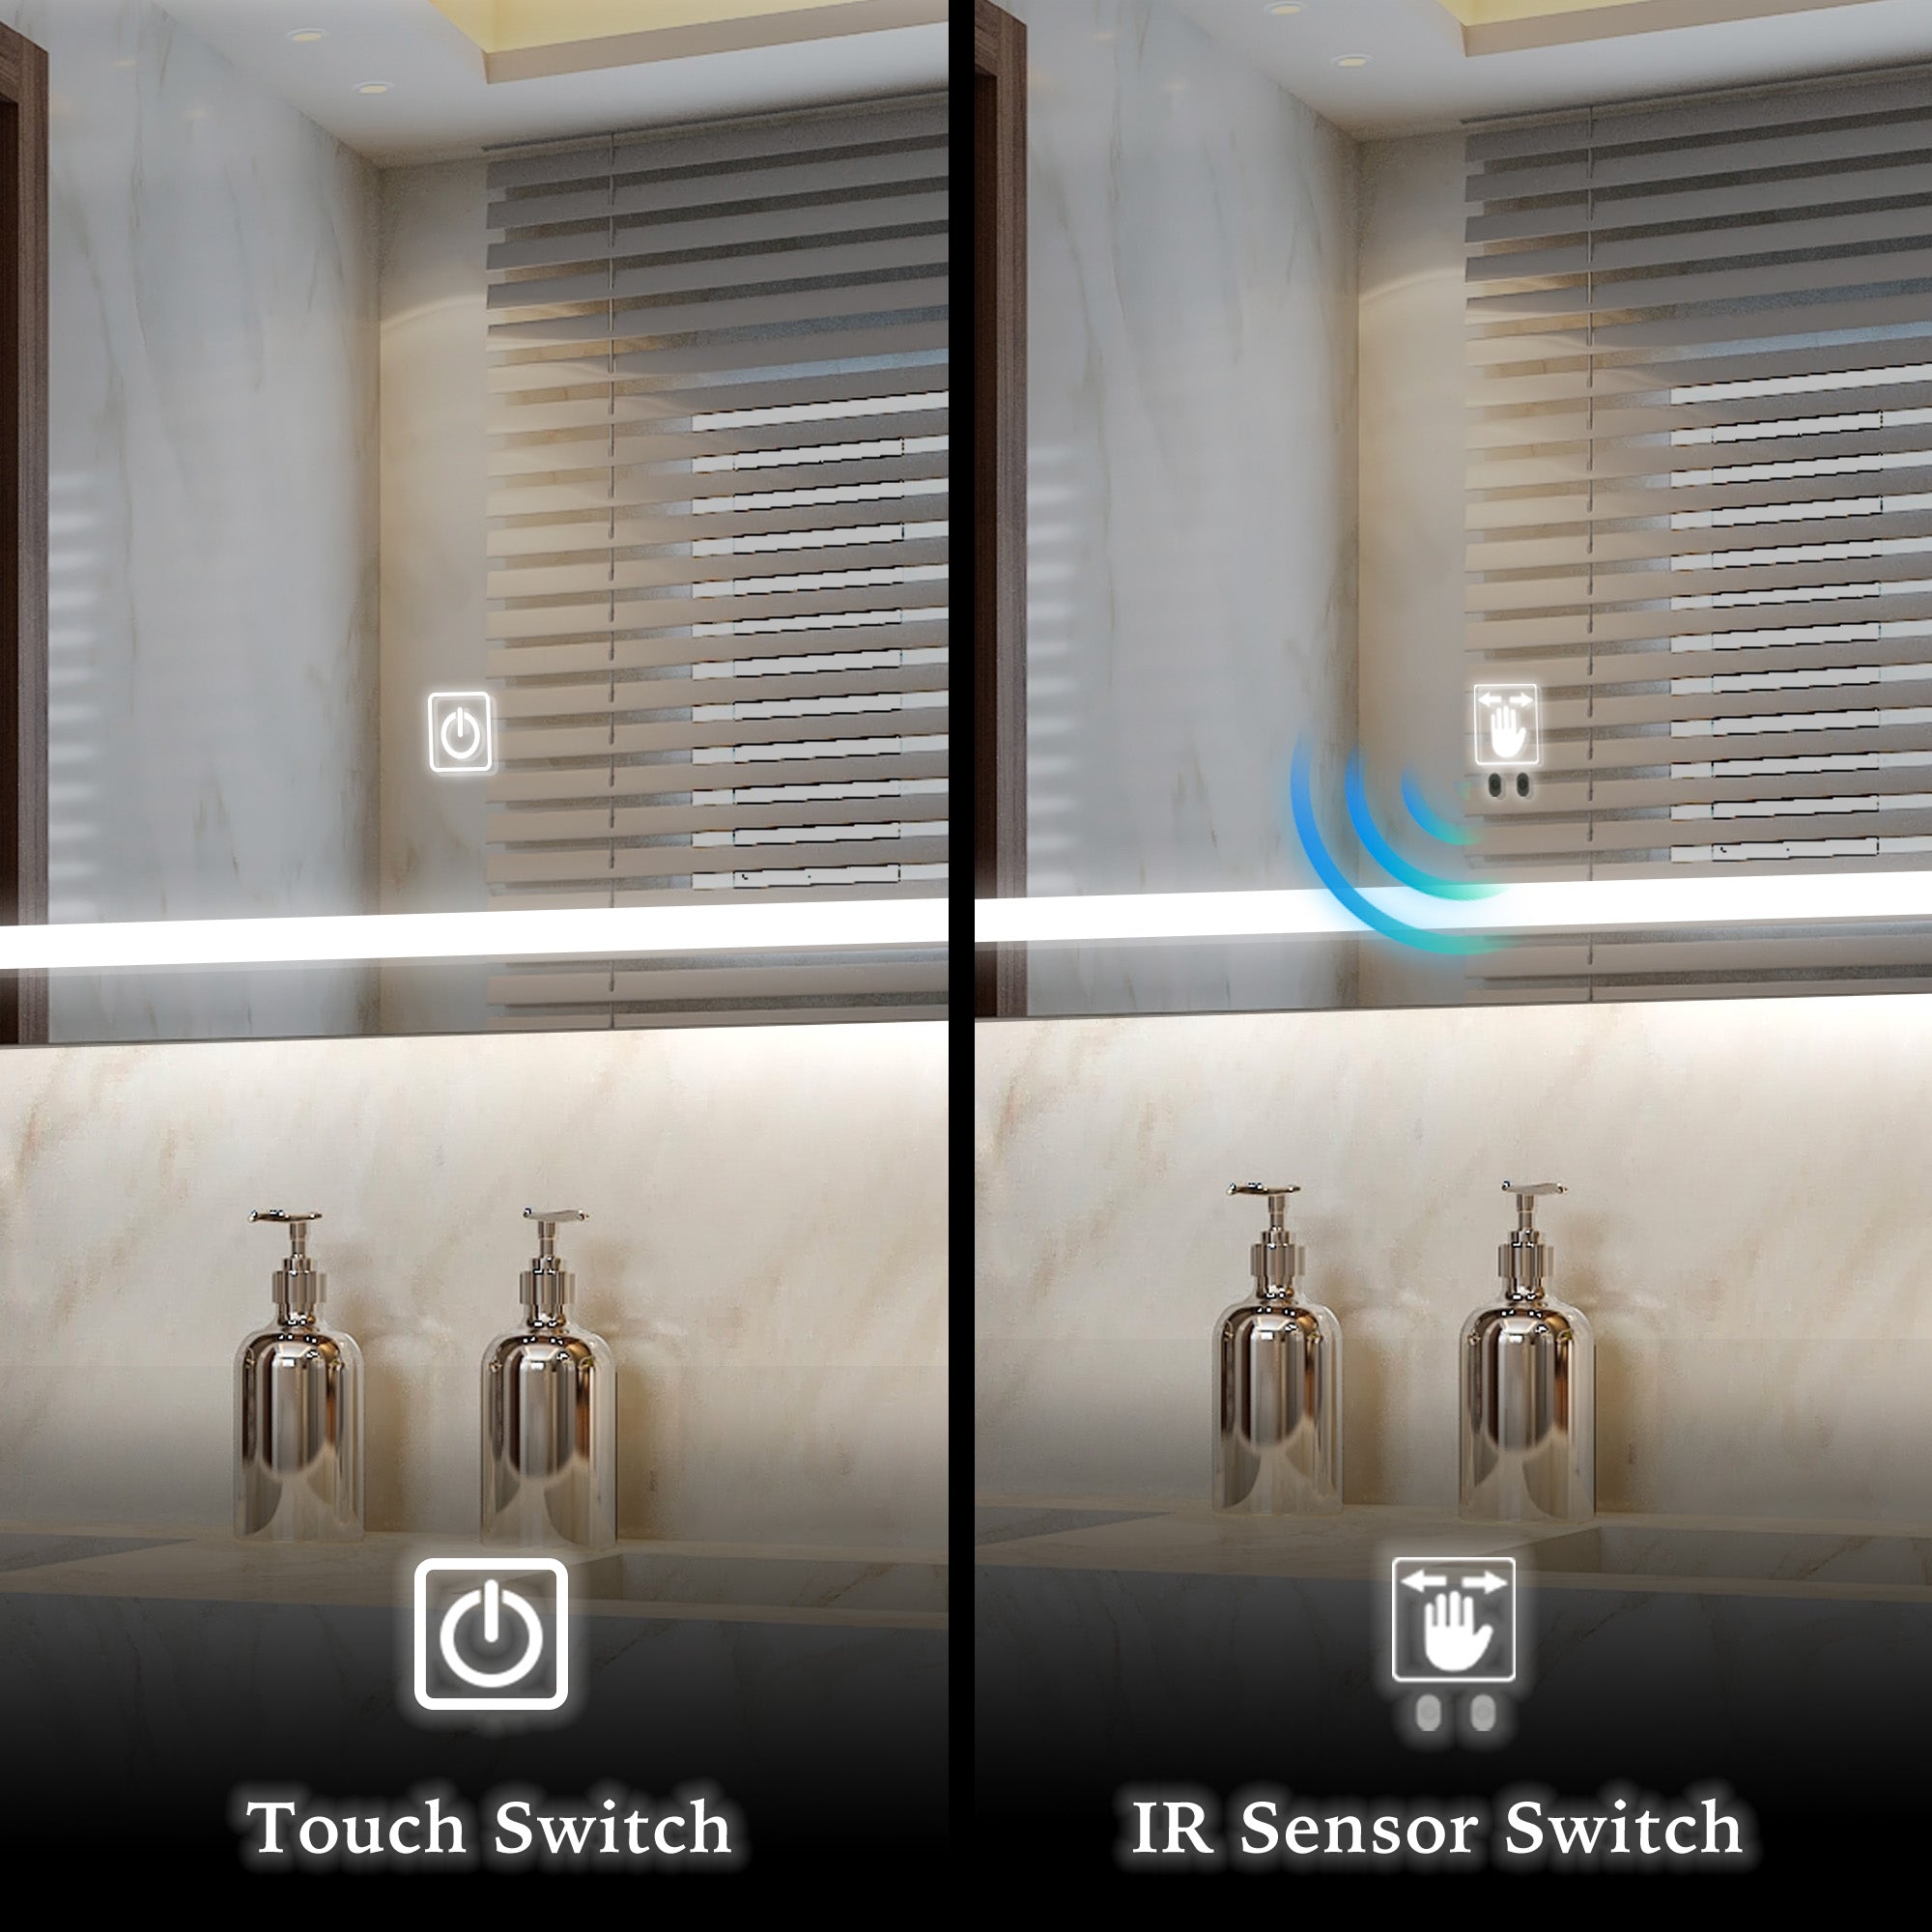 POLARIS Customize LED Mirror with Backlight